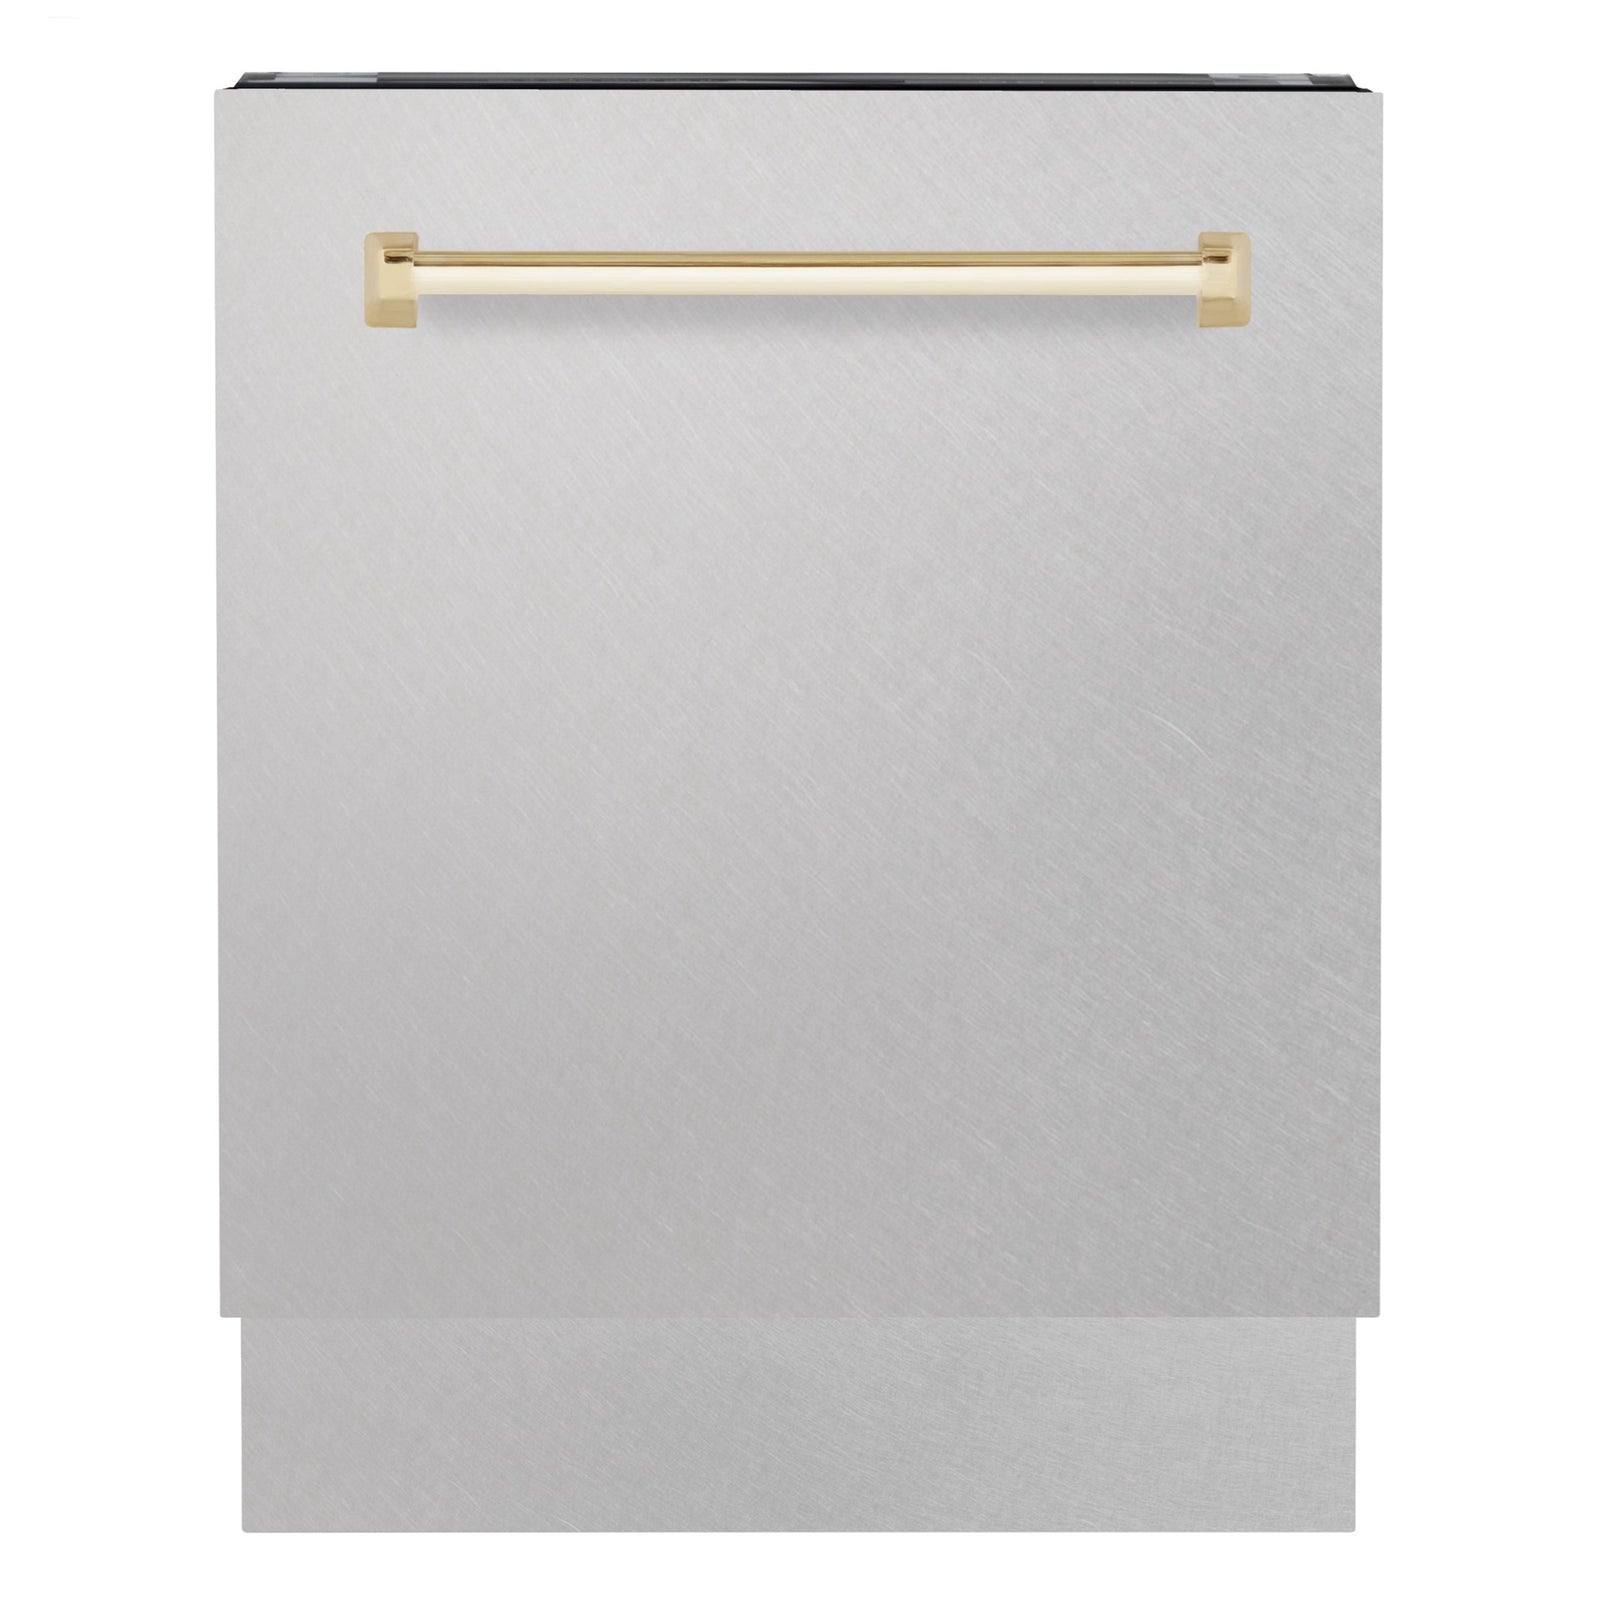 ZLINE Autograph Series 24 inch Tall Dishwasher in DuraSnow® Stainless Steel with Gold Handle, DWVZ-SN-24-G - Smart Kitchen Lab